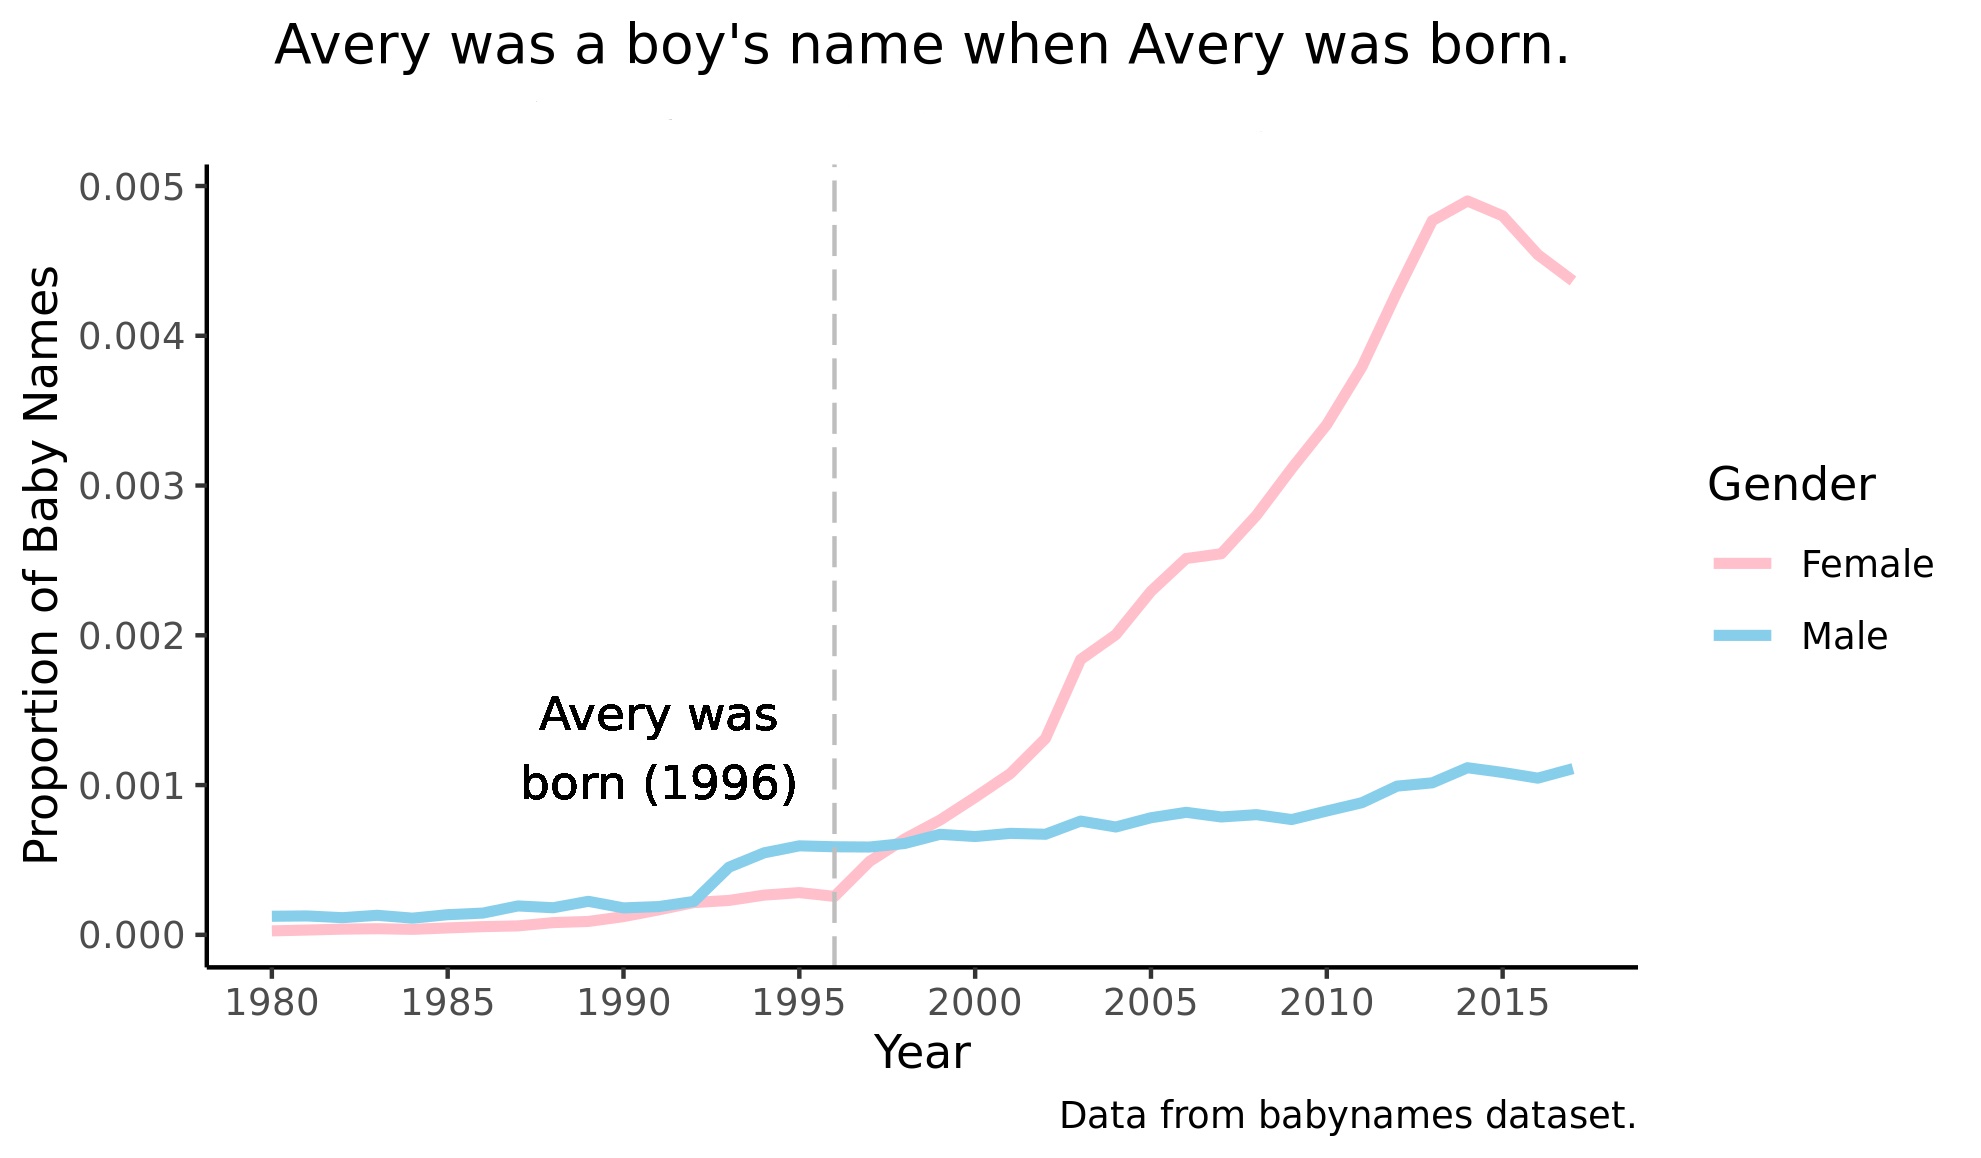 Evolution of Avery